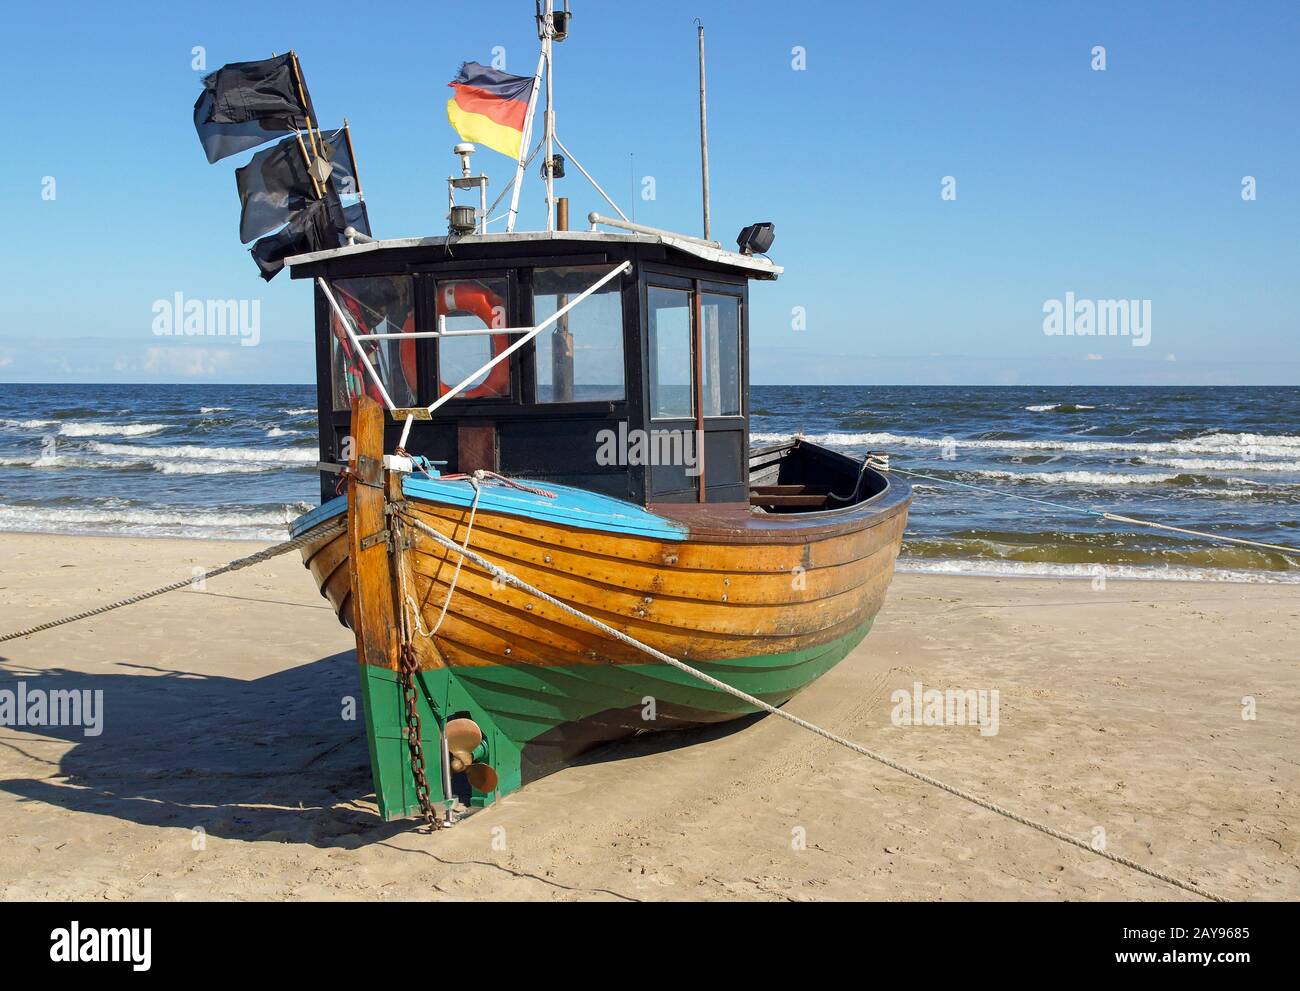 Fishing boat at the sea Stock Photo